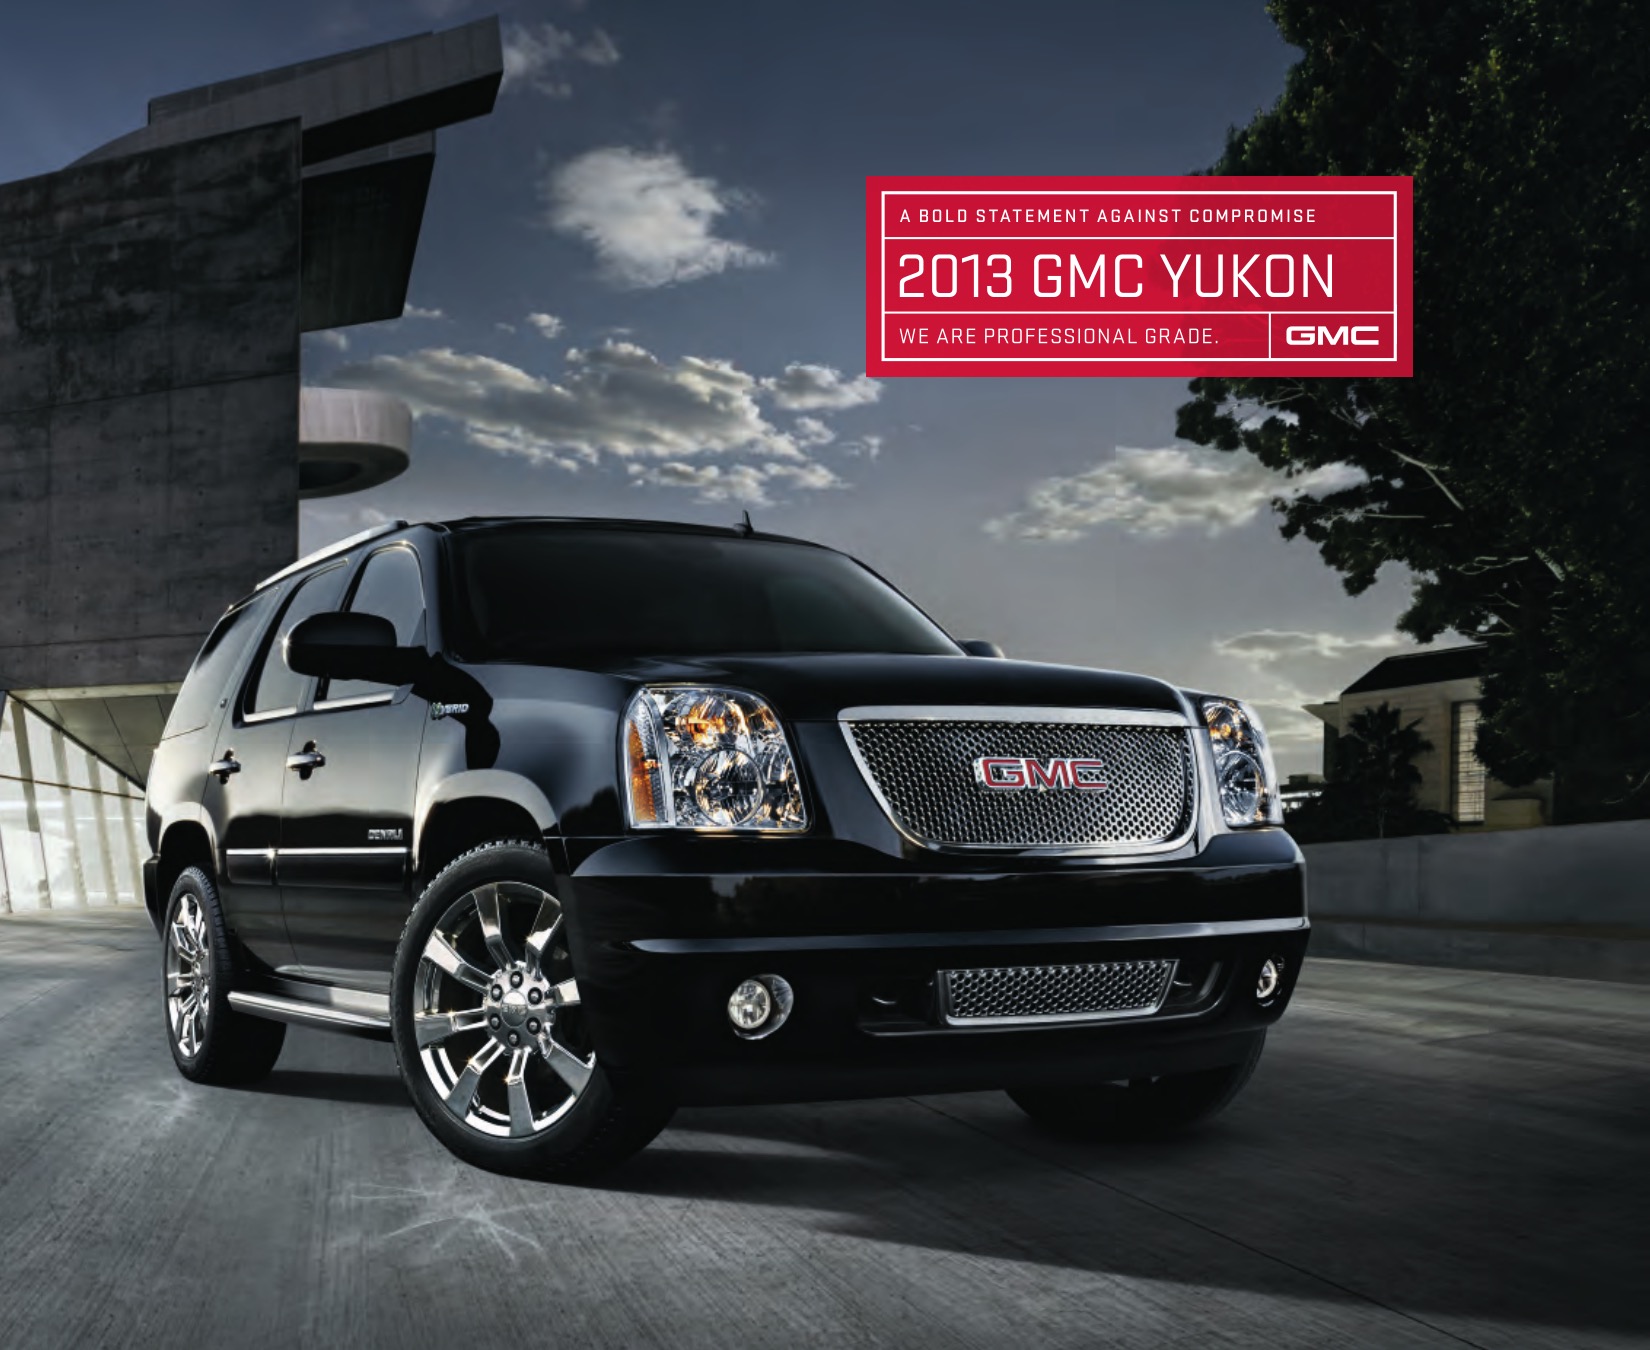 2013 GMC Yukon Brochure